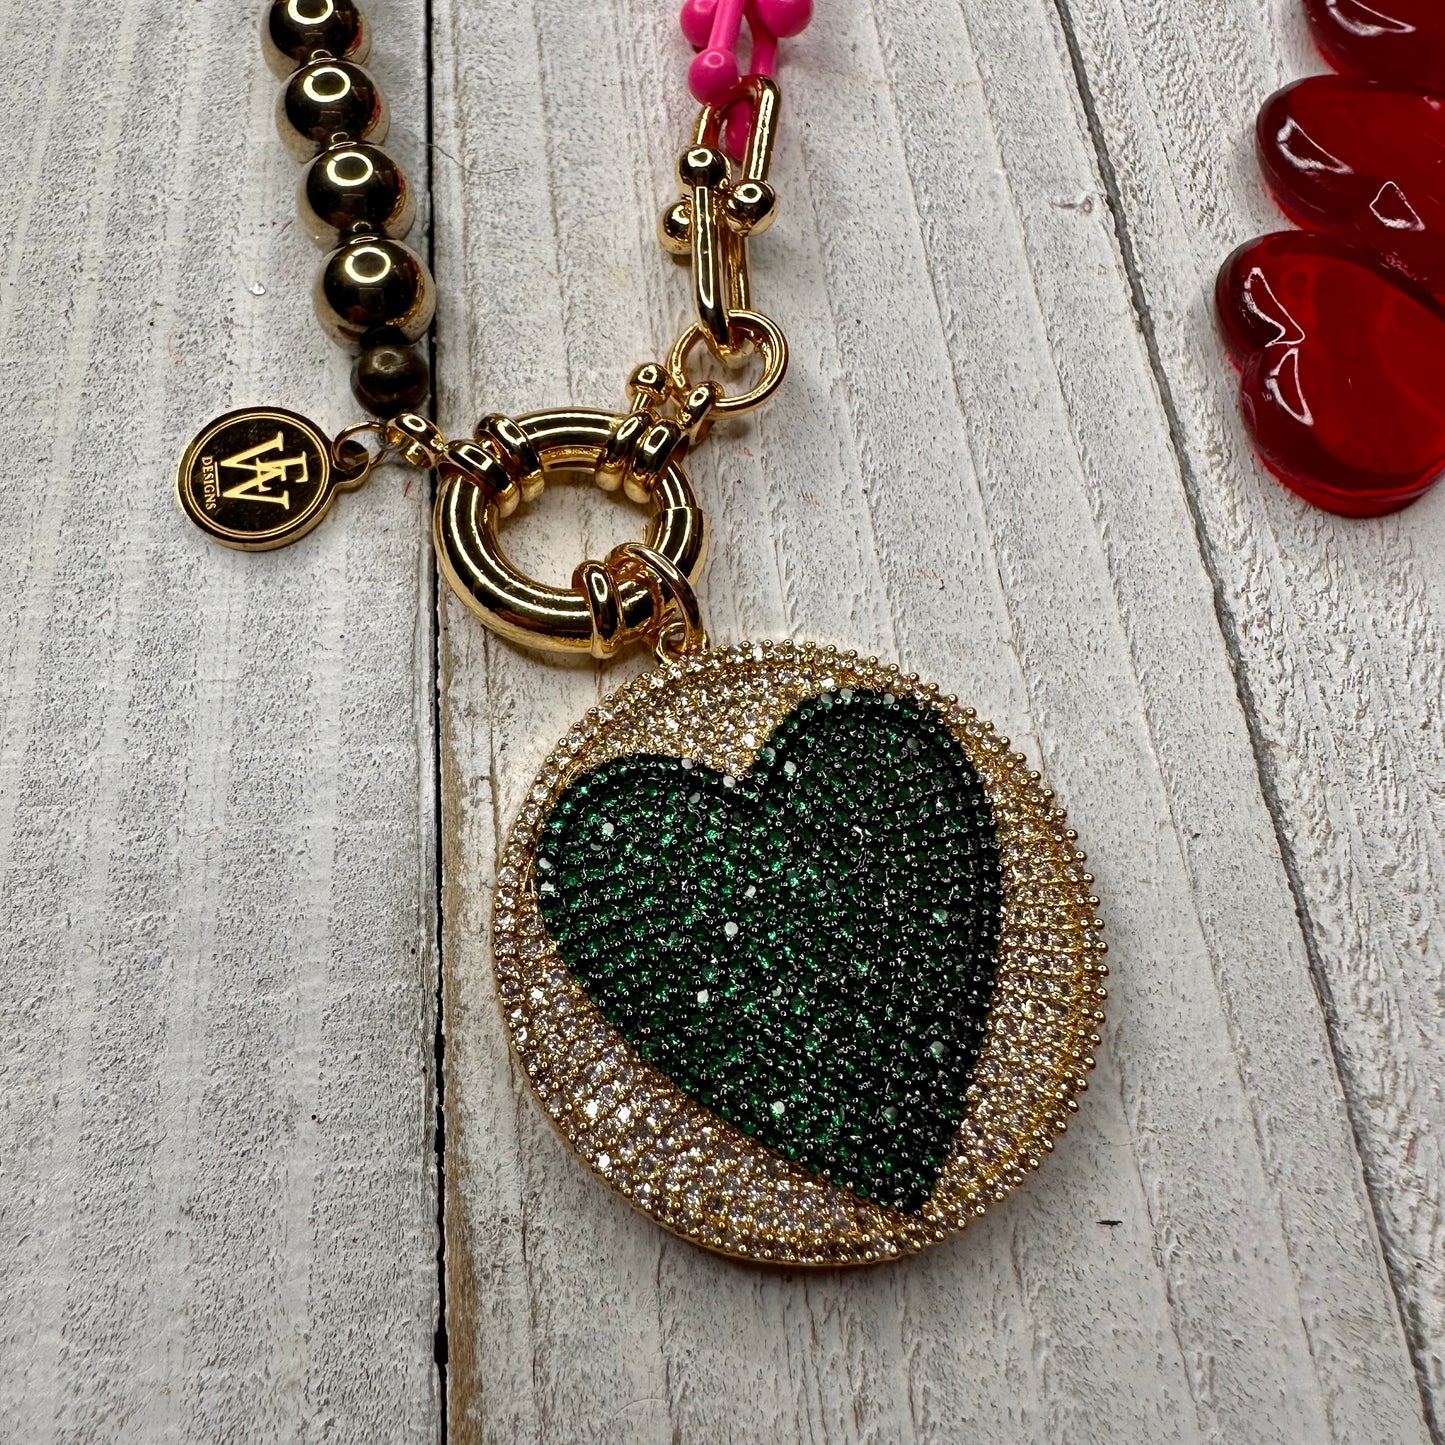 Erika Williner Designs - Love necklace